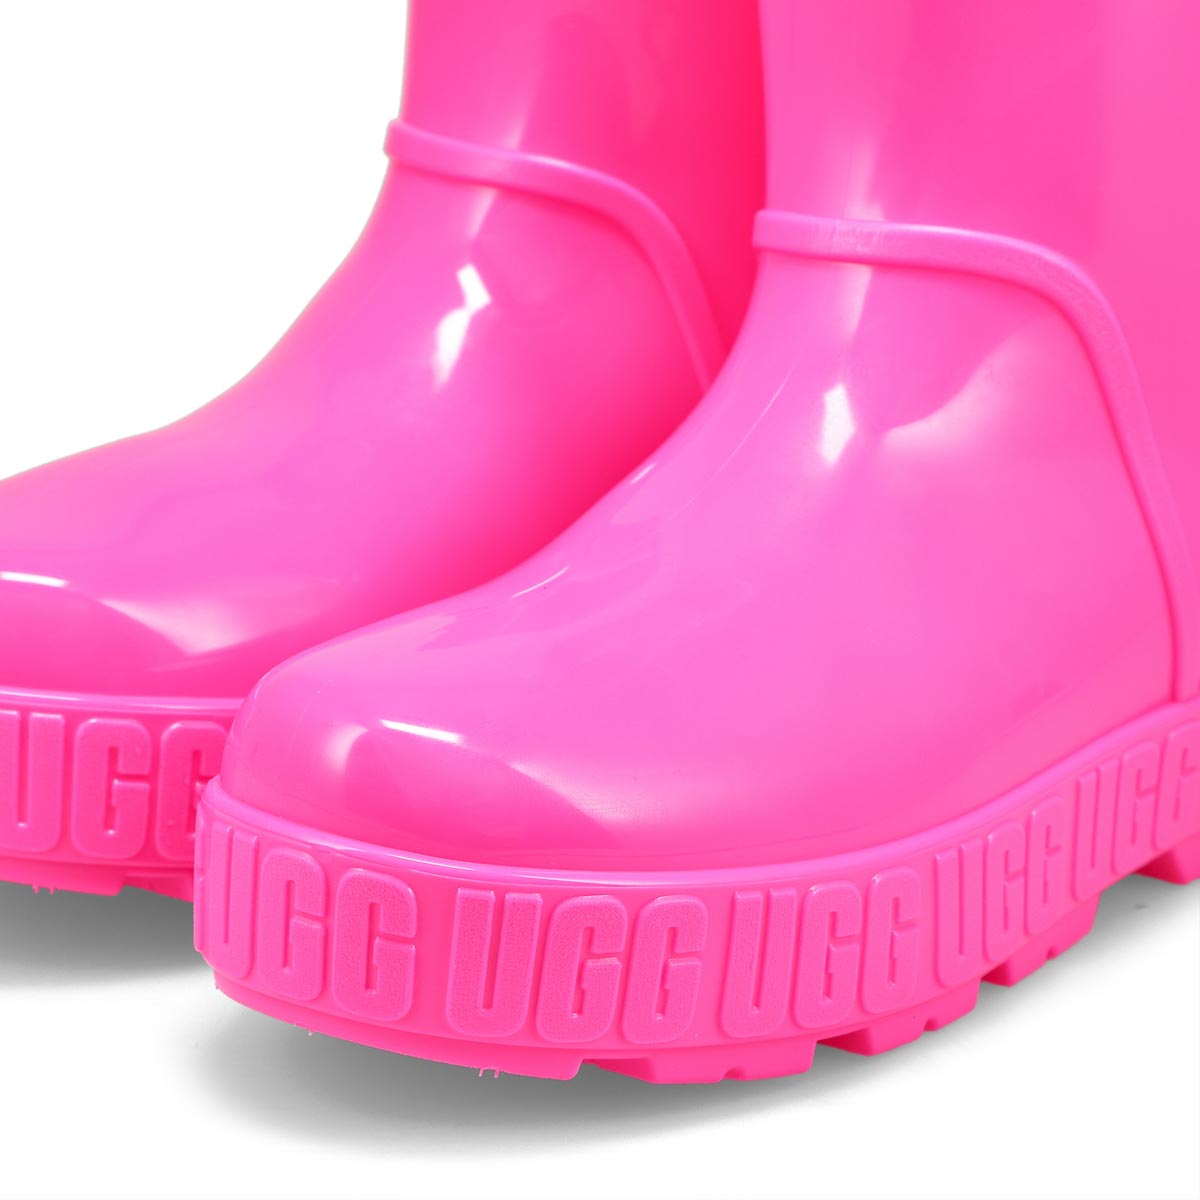 Women's Drizlita Rain Boot - Taffy Pink